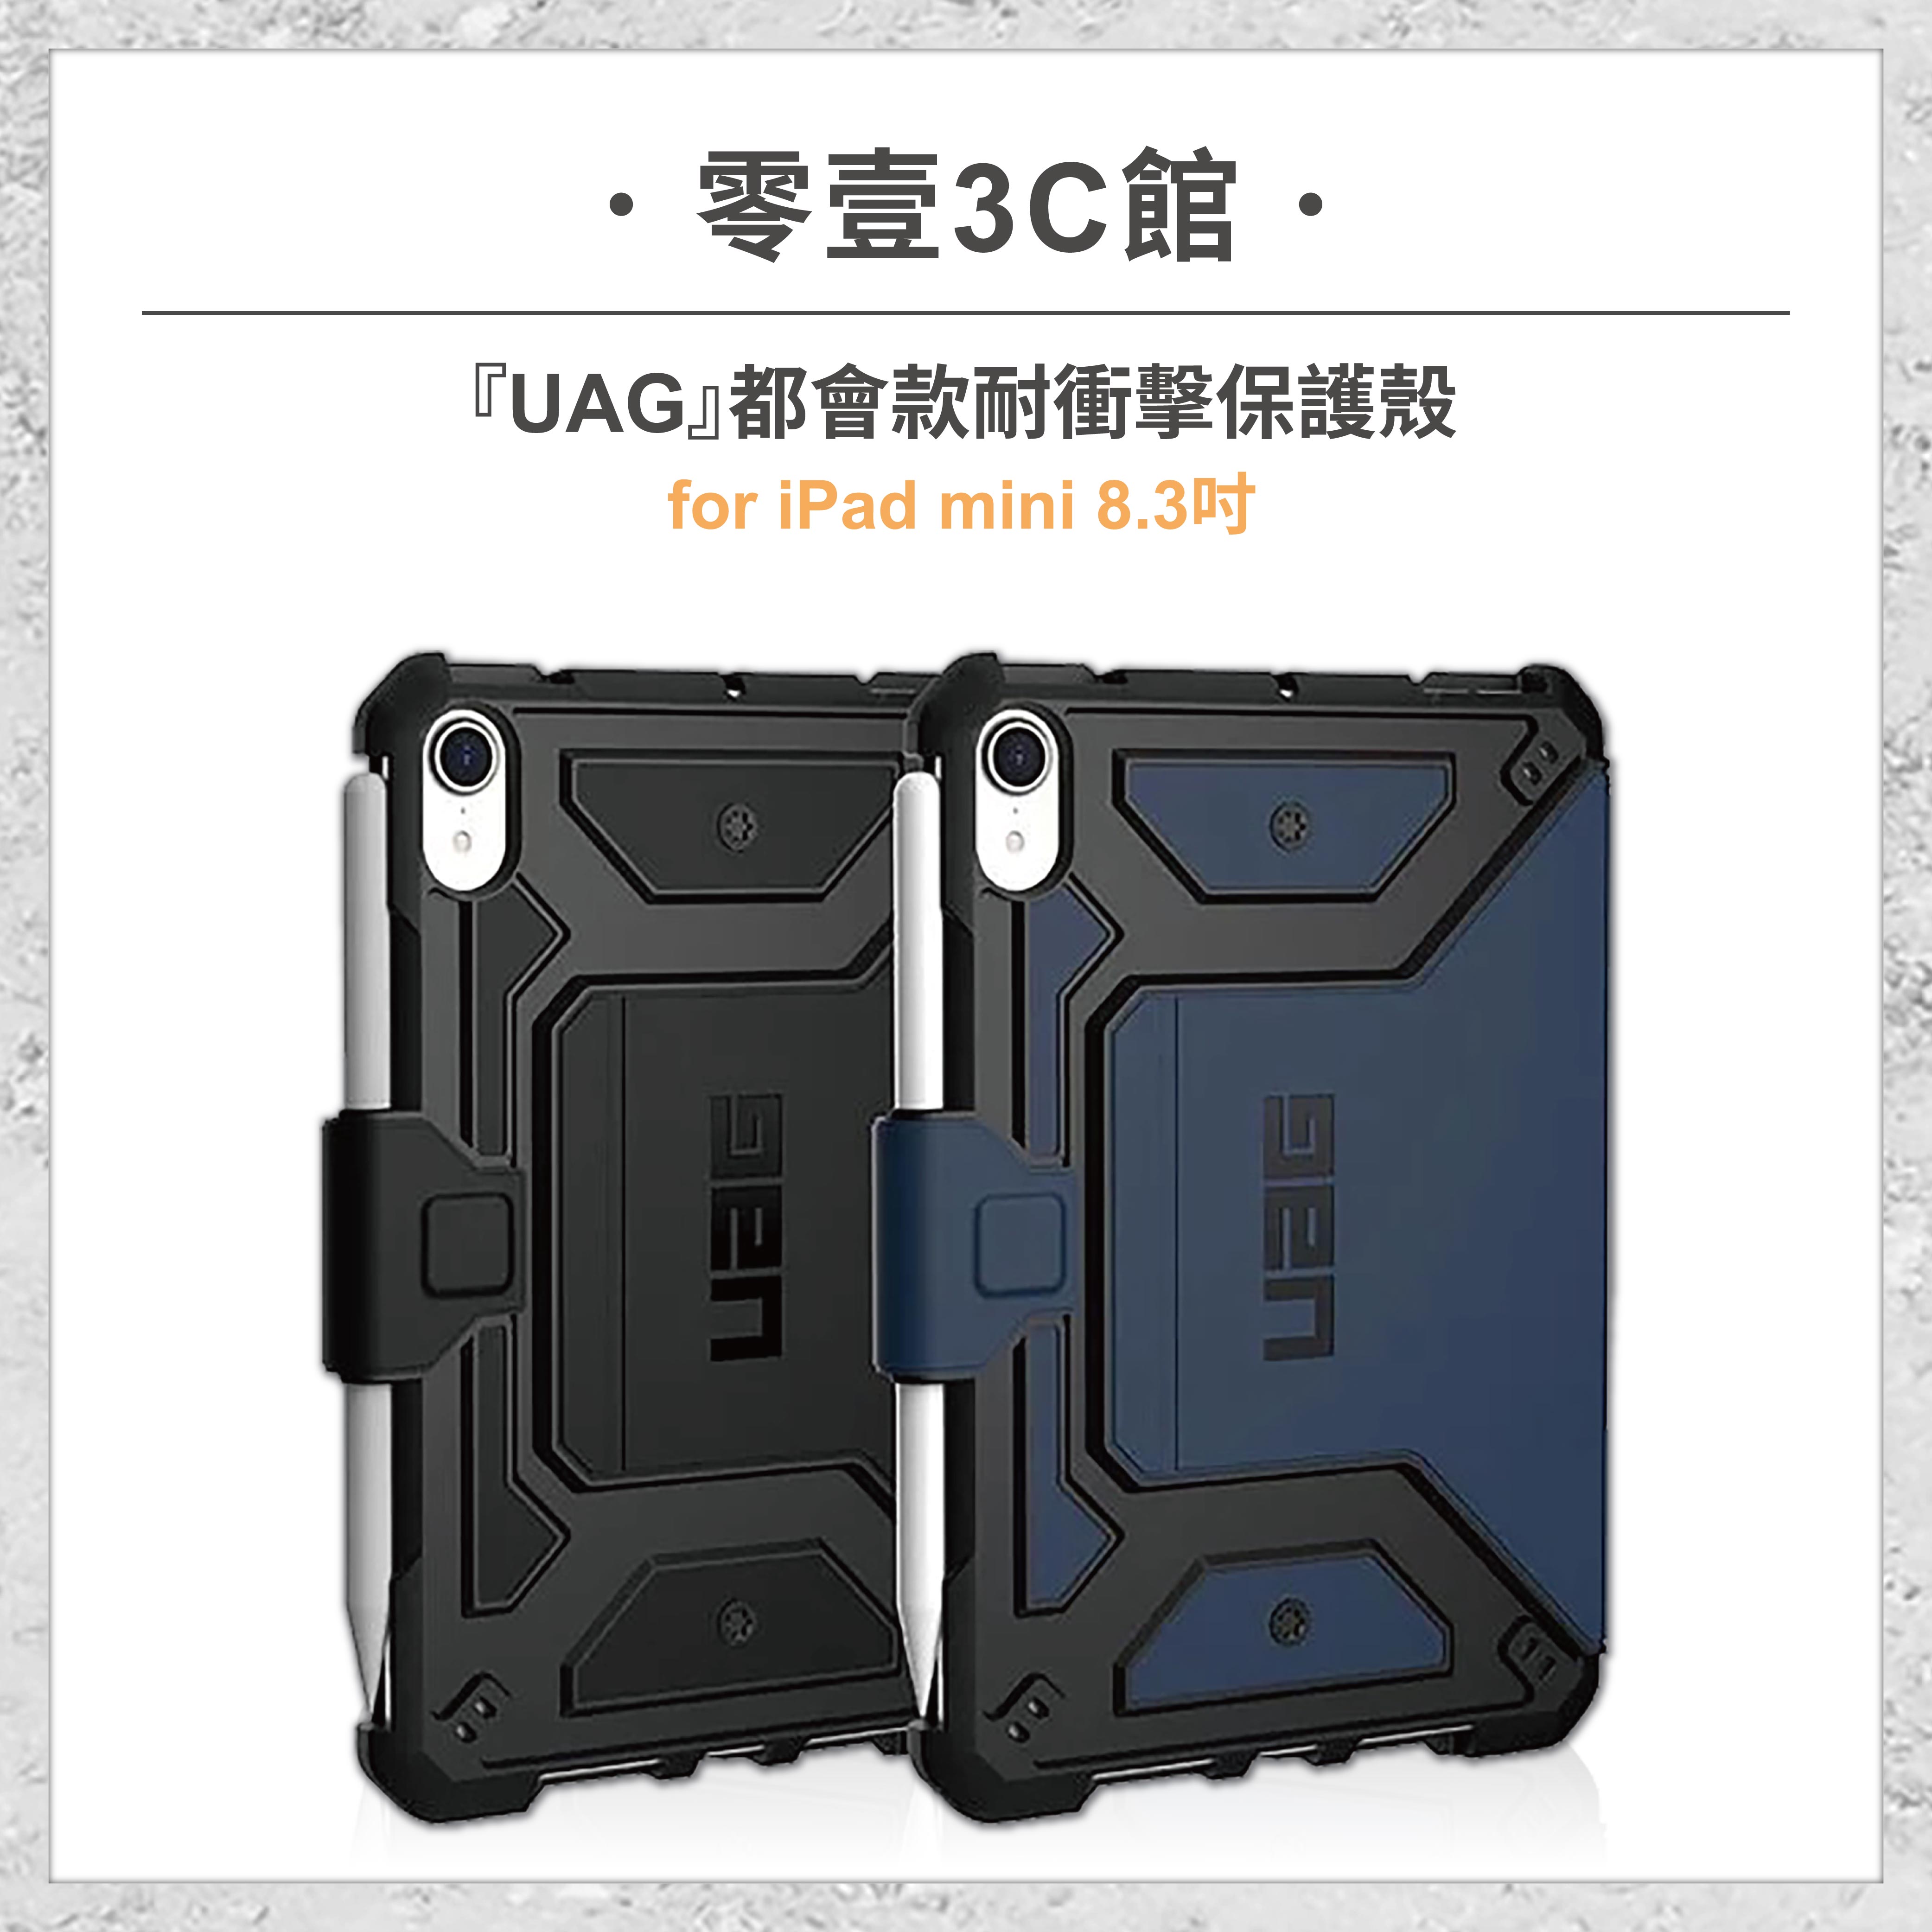 『UAG』都會款耐衝擊保護殼 for iPad mini 8.3吋 平板保護殼 保護殼